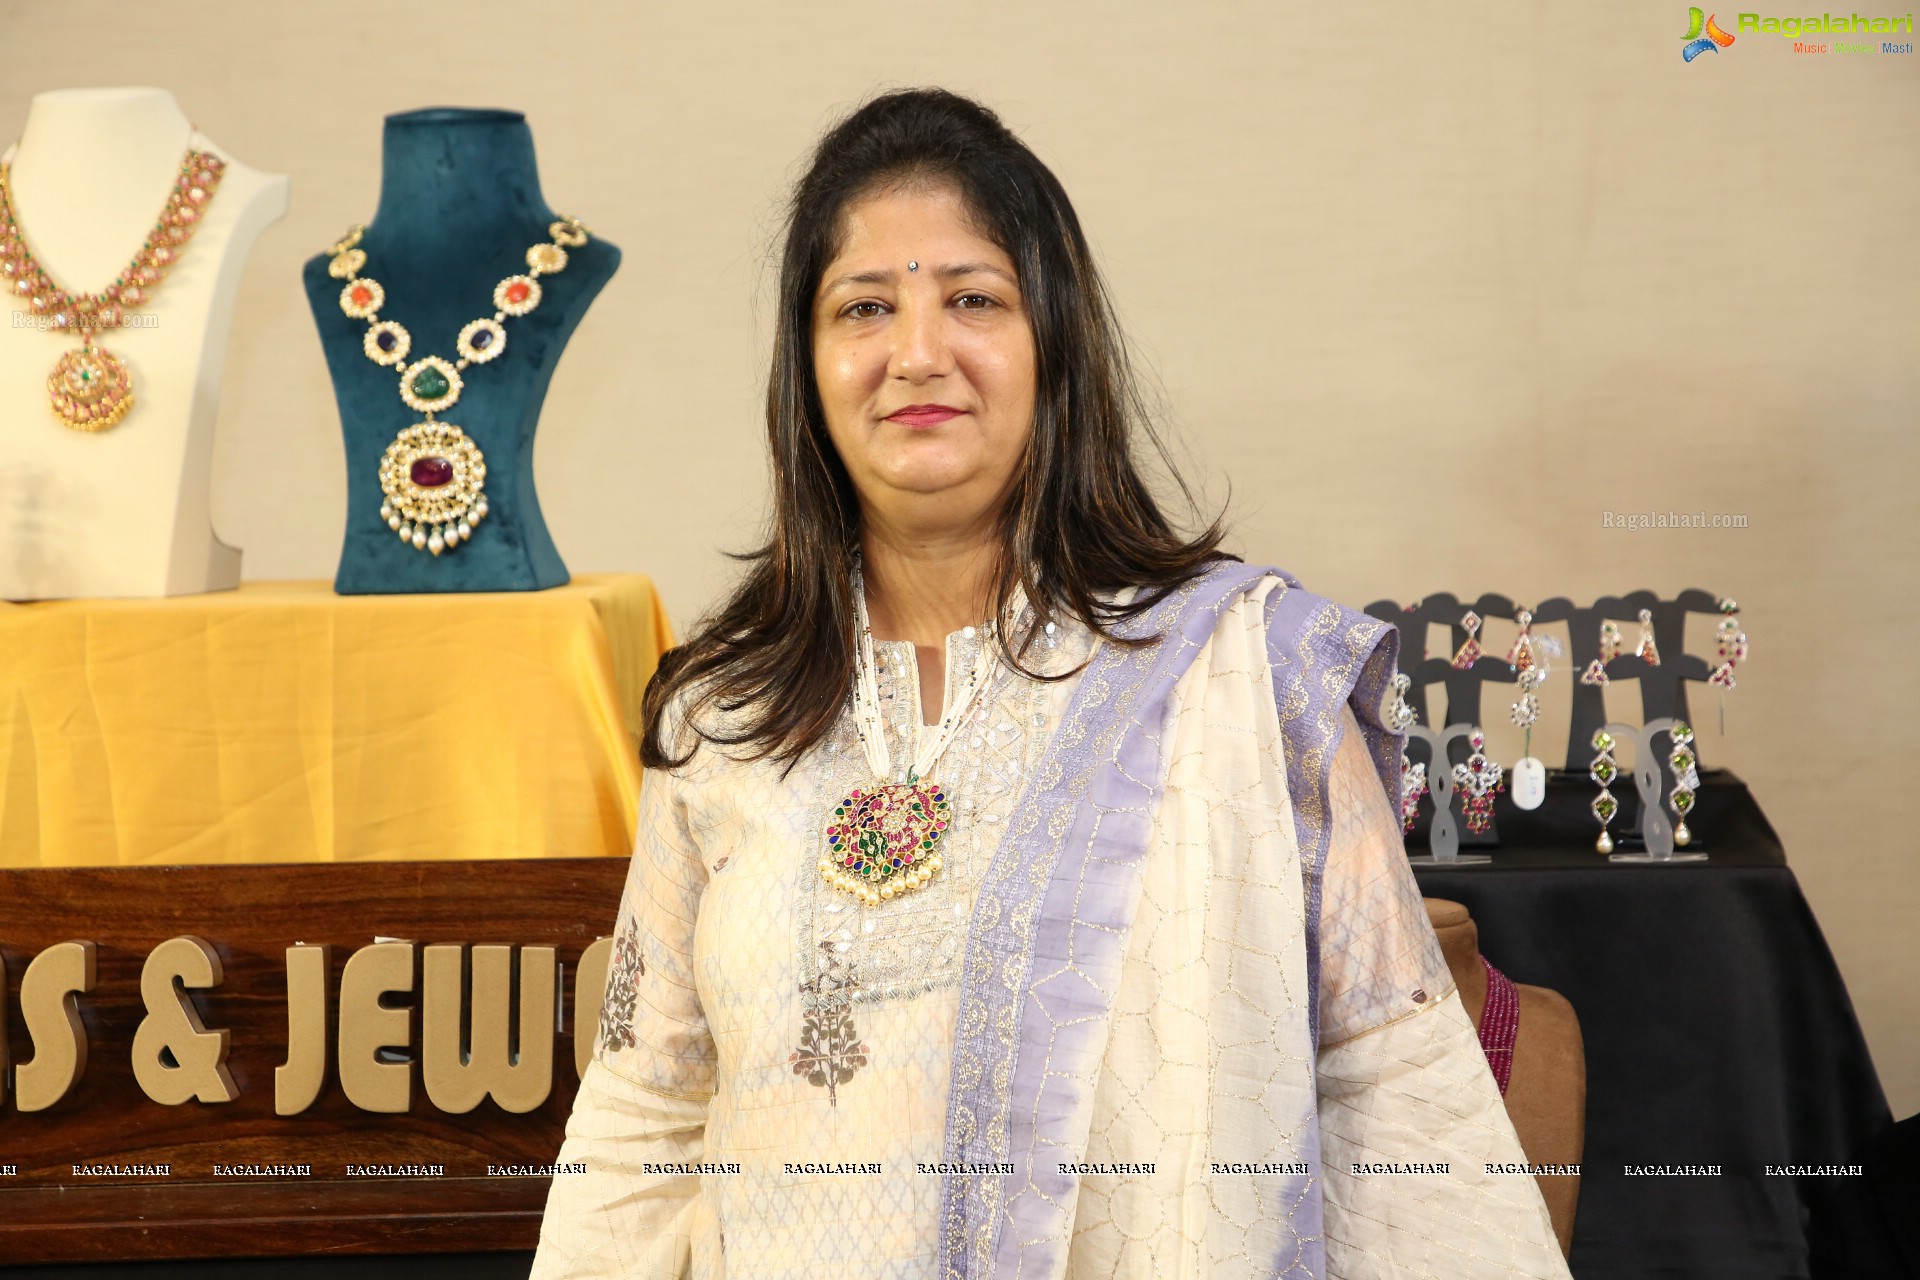 Jaipur Gems & Jewels Exhibition 2019